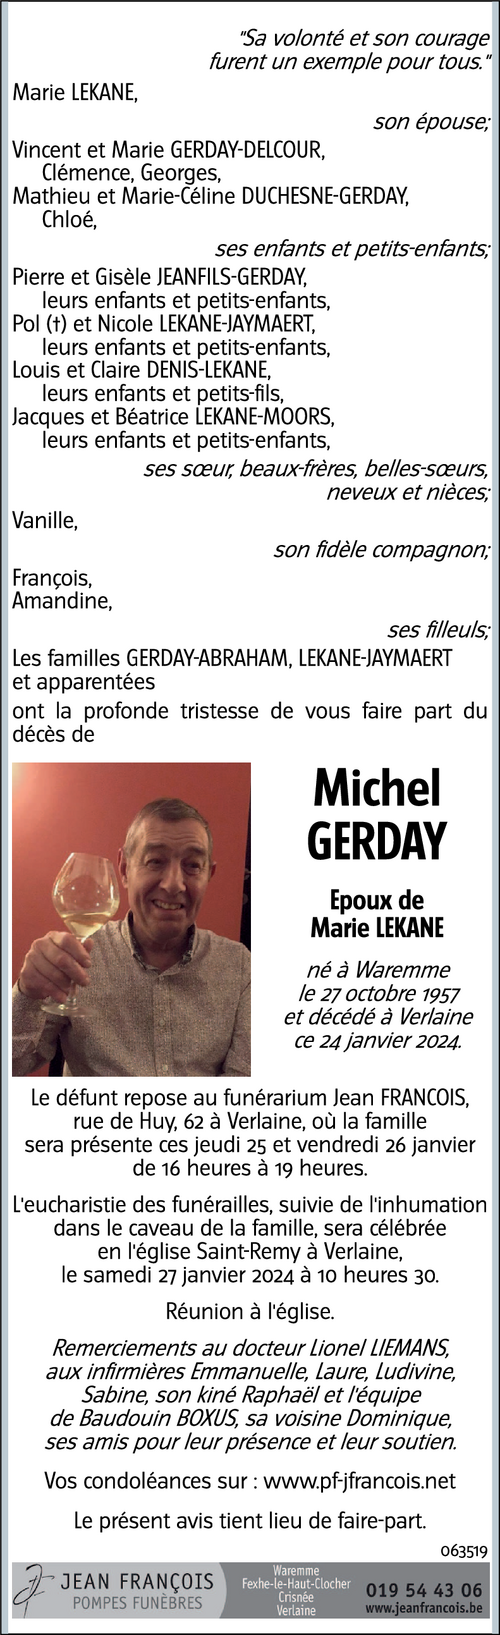 Michel GERDAY